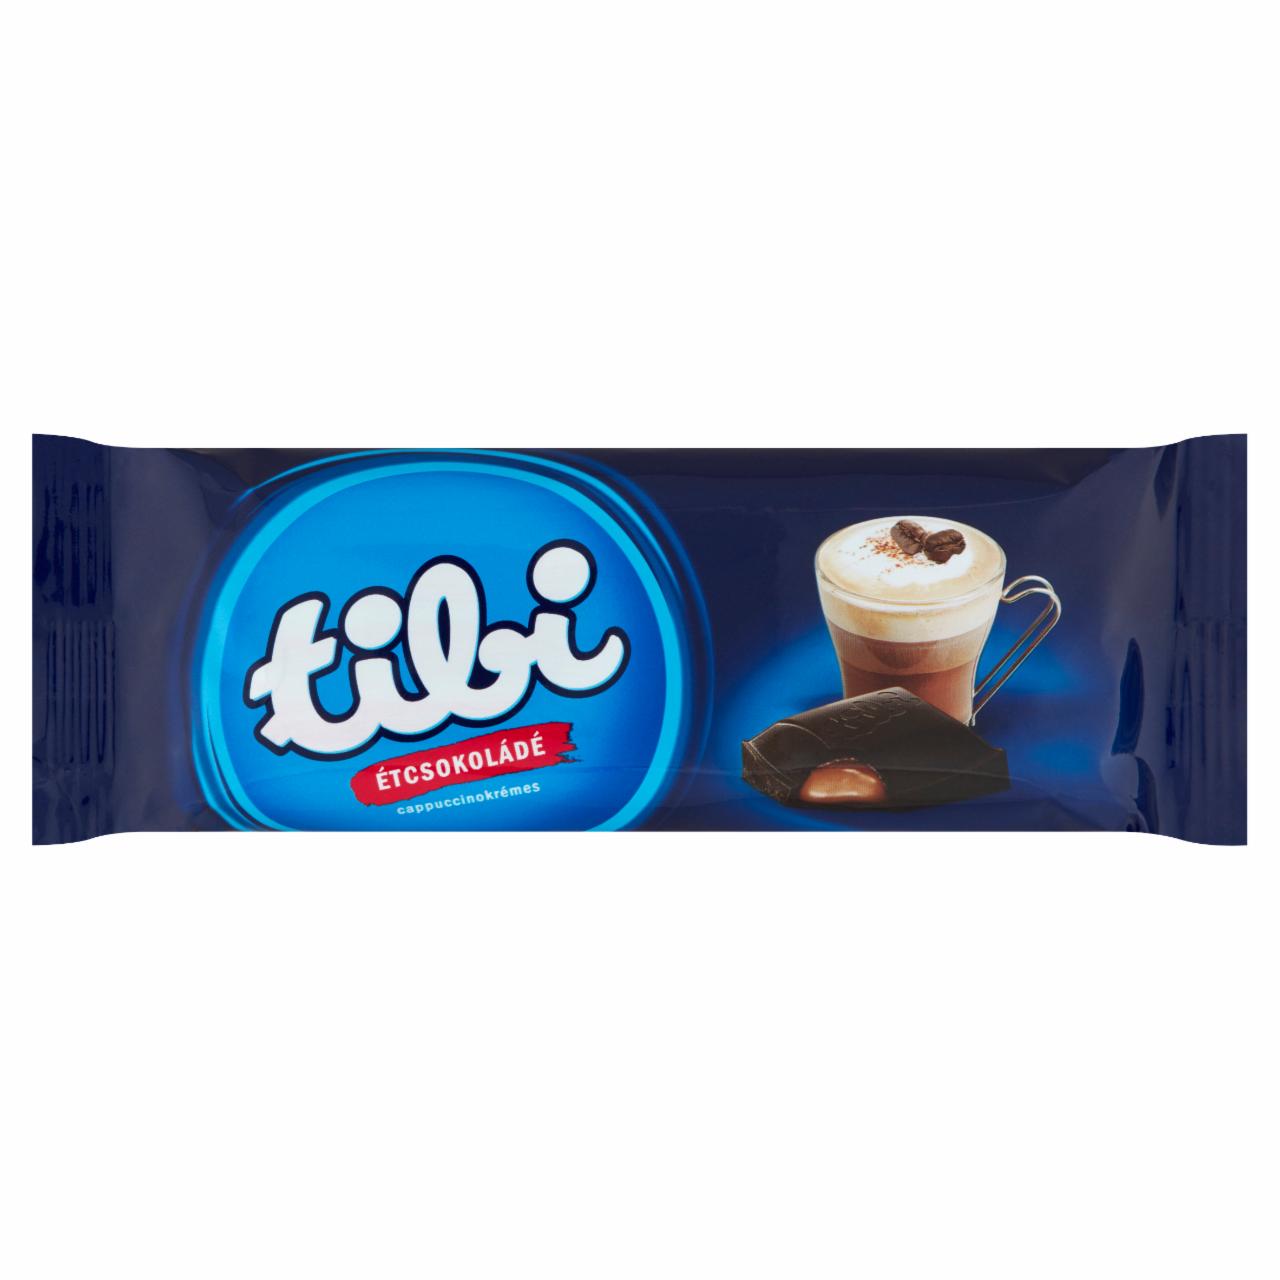 Képek - Tibi cappuccinokrémes étcsokoládé 100 g